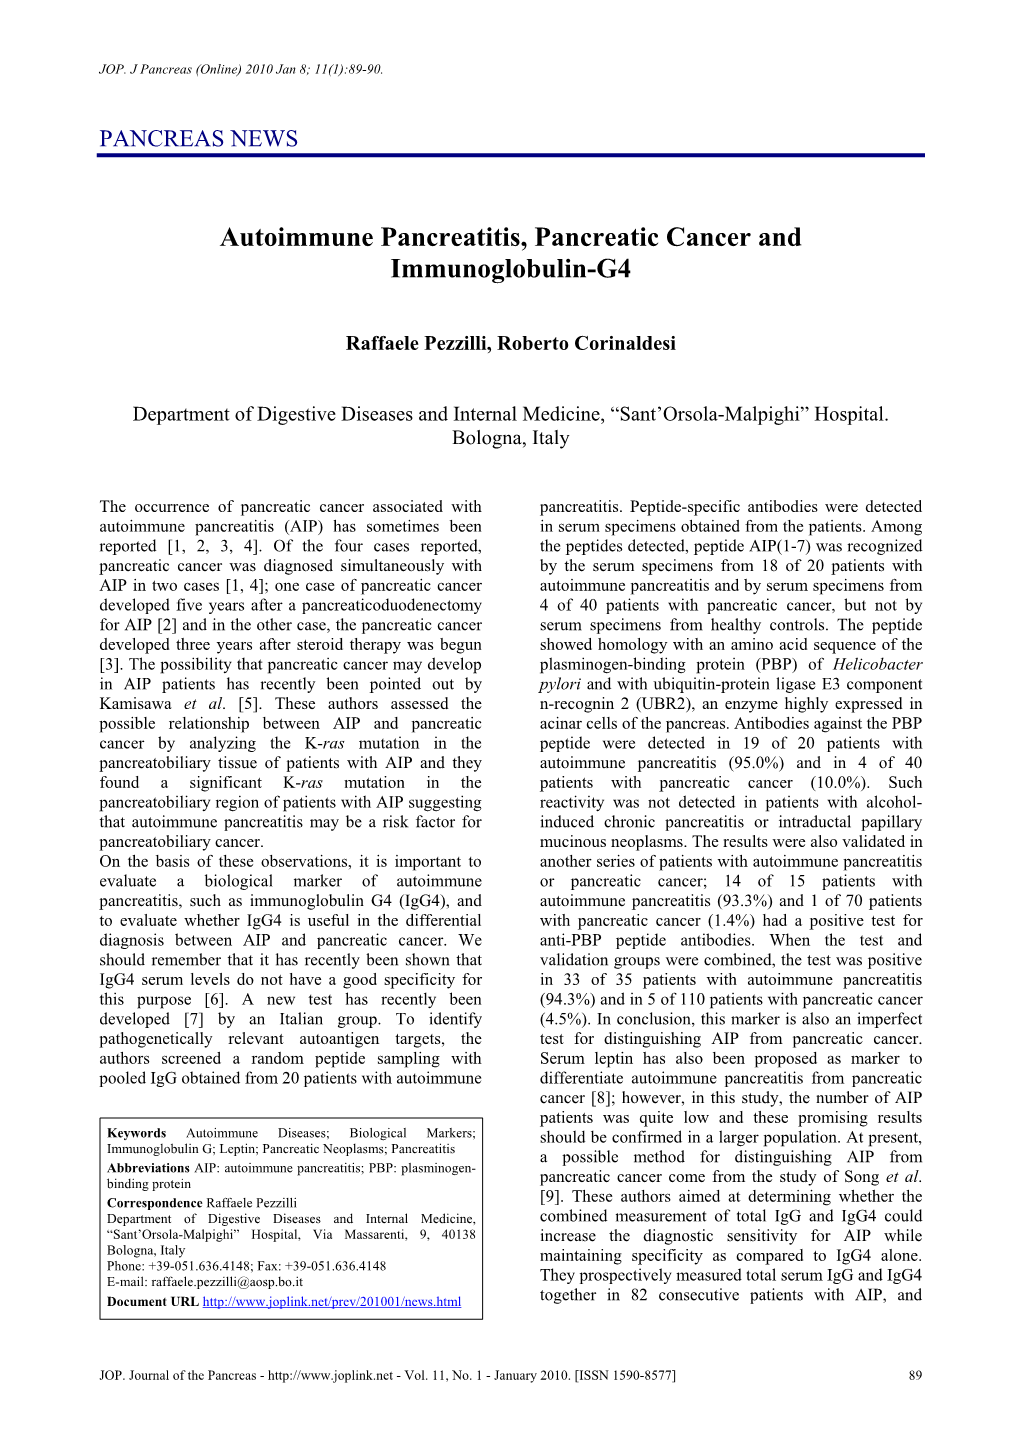 Autoimmune Pancreatitis, Pancreatic Cancer and Immunoglobulin-G4